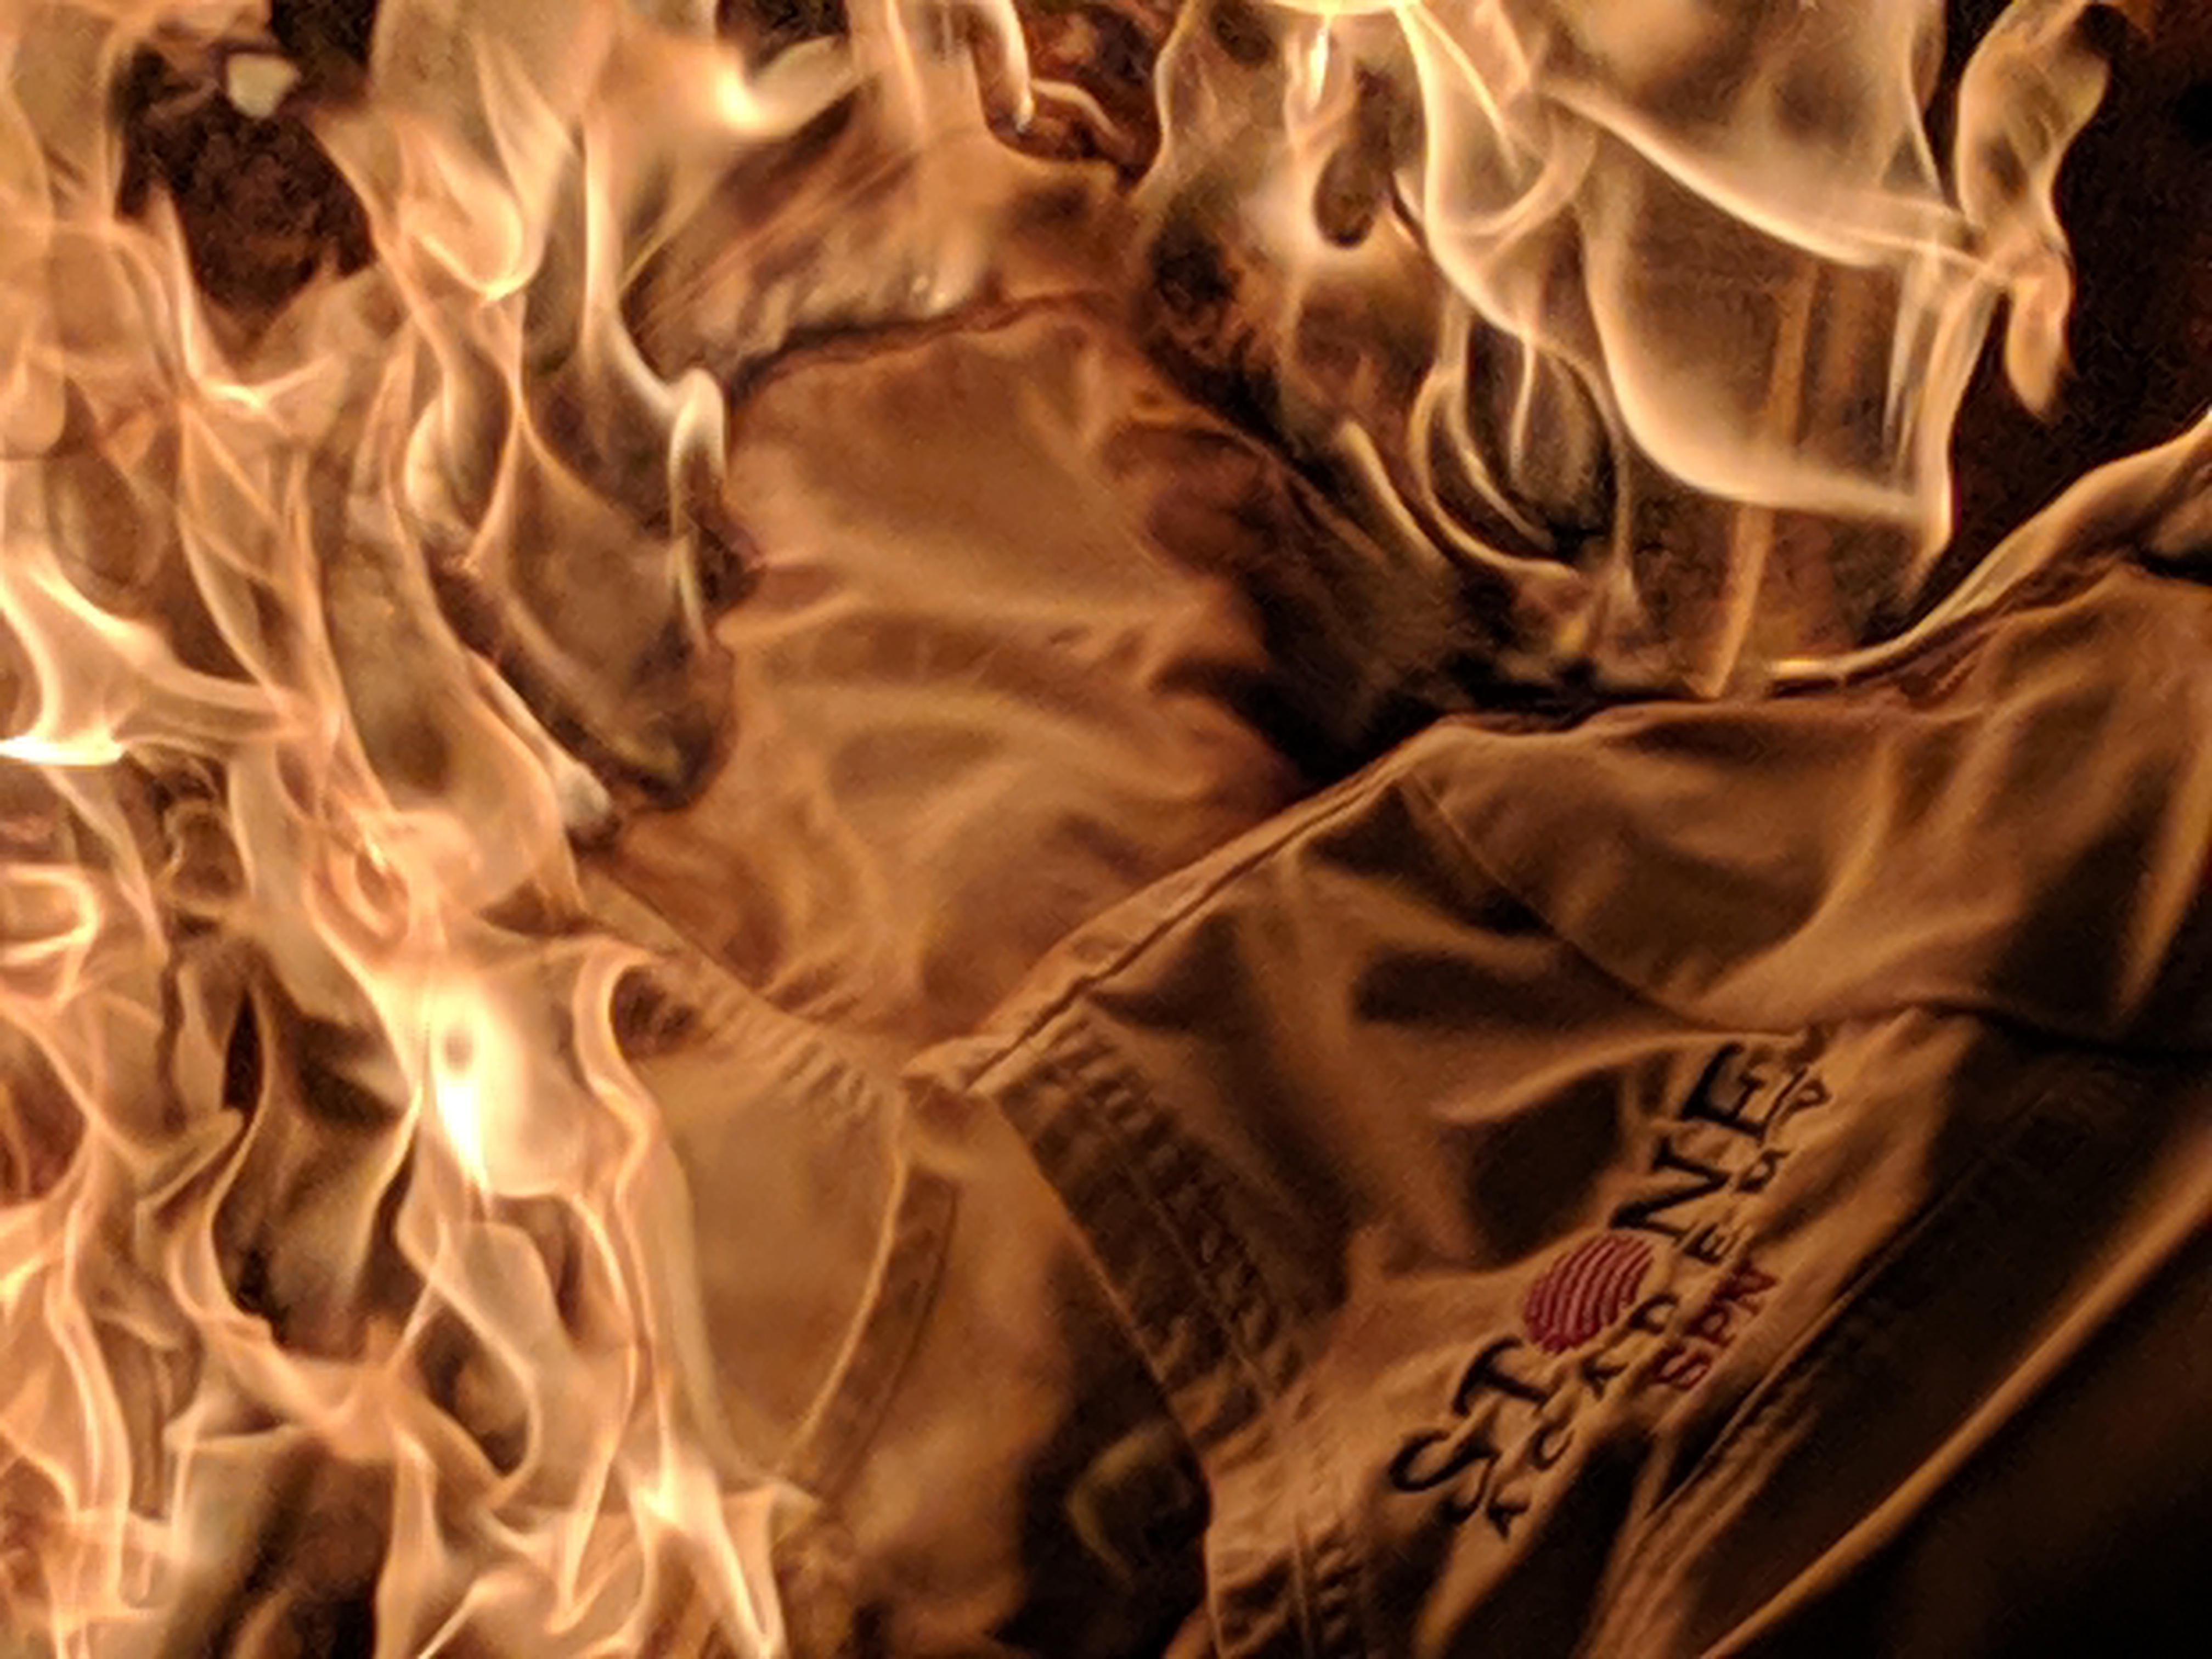 burning stone academy uniform on a pallete in a bon fire